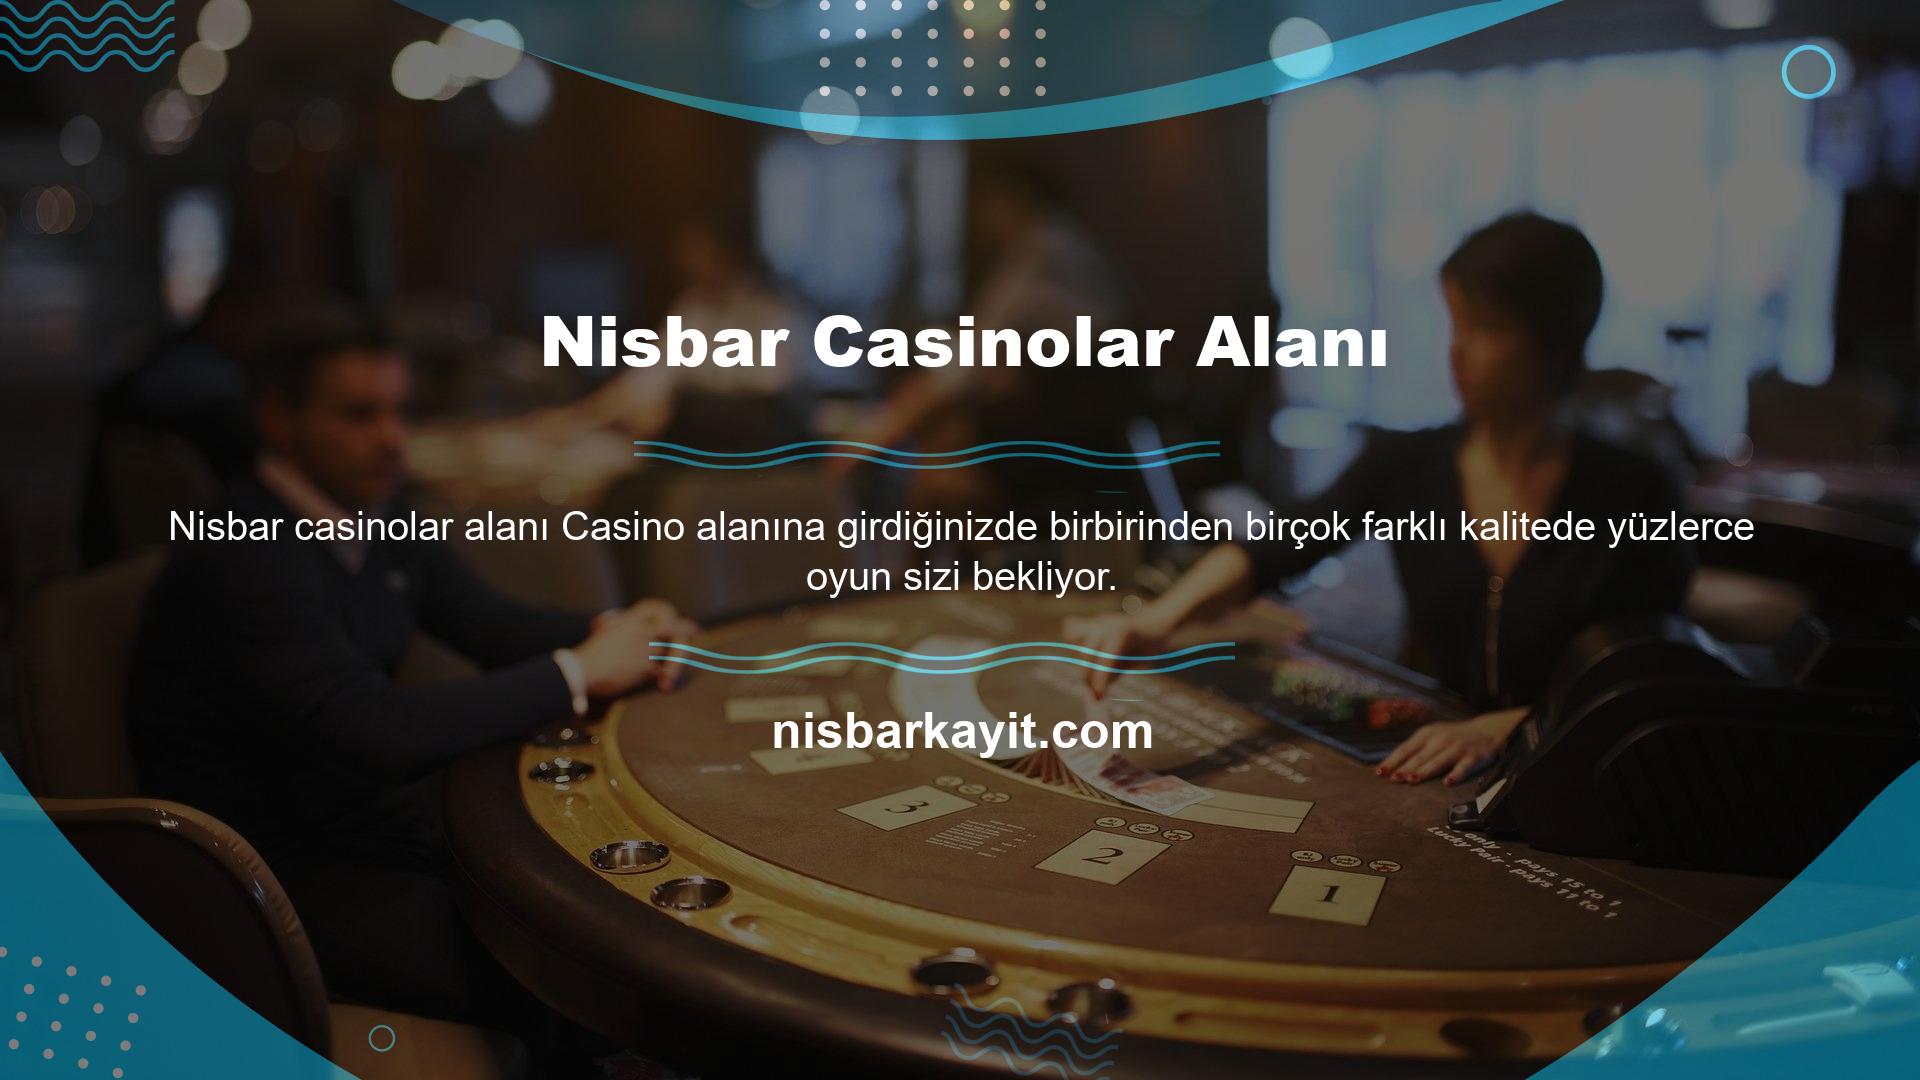 Nisbar Casinolar Alanı